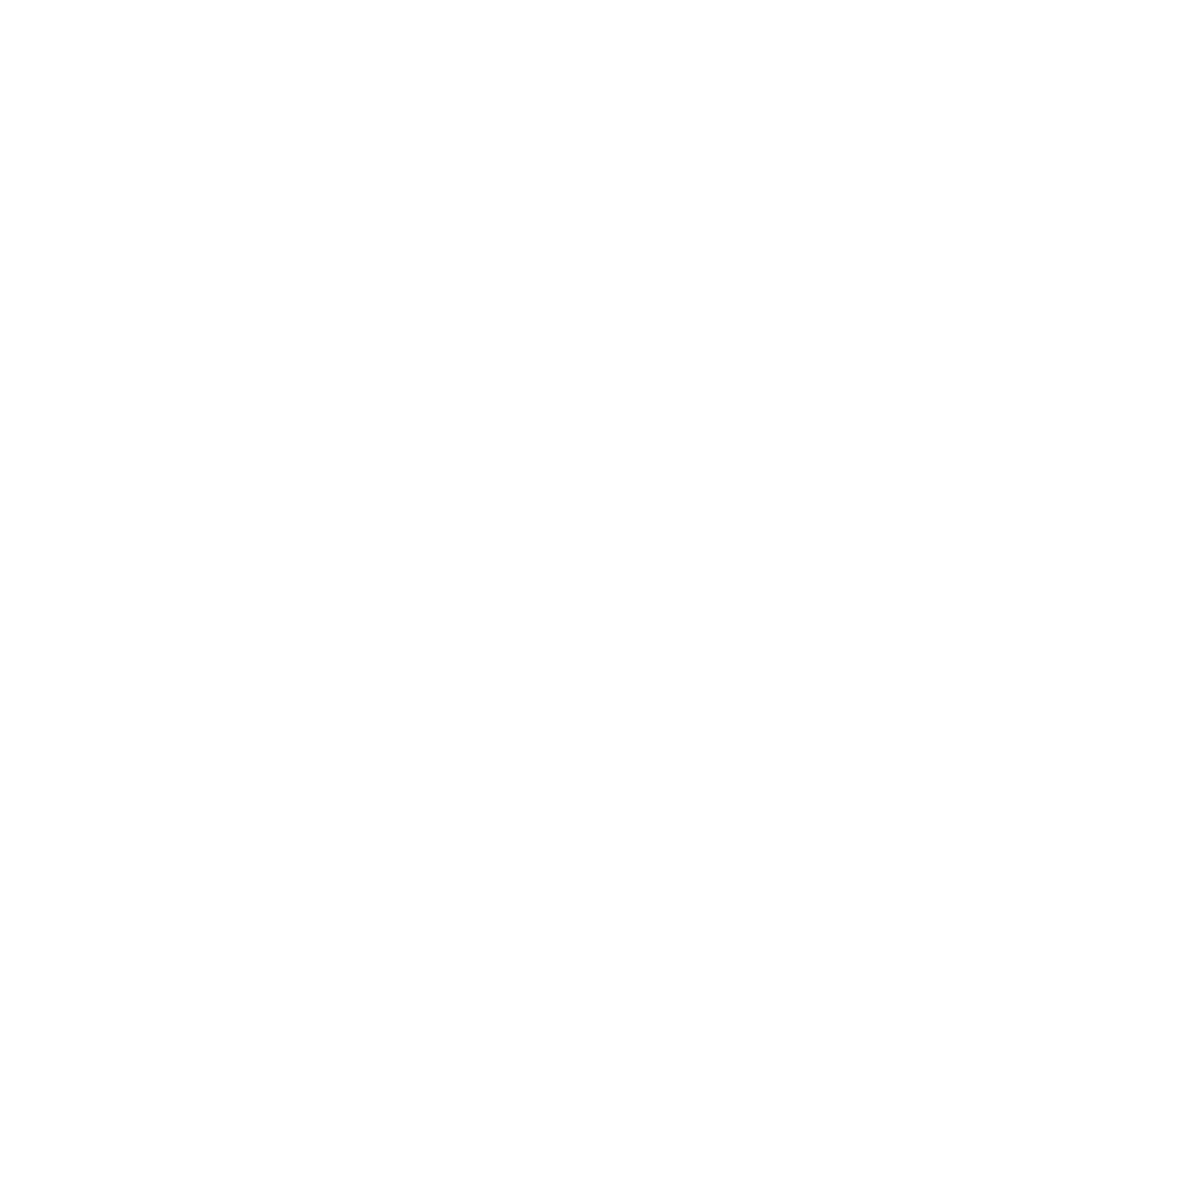 MR. MACHIN